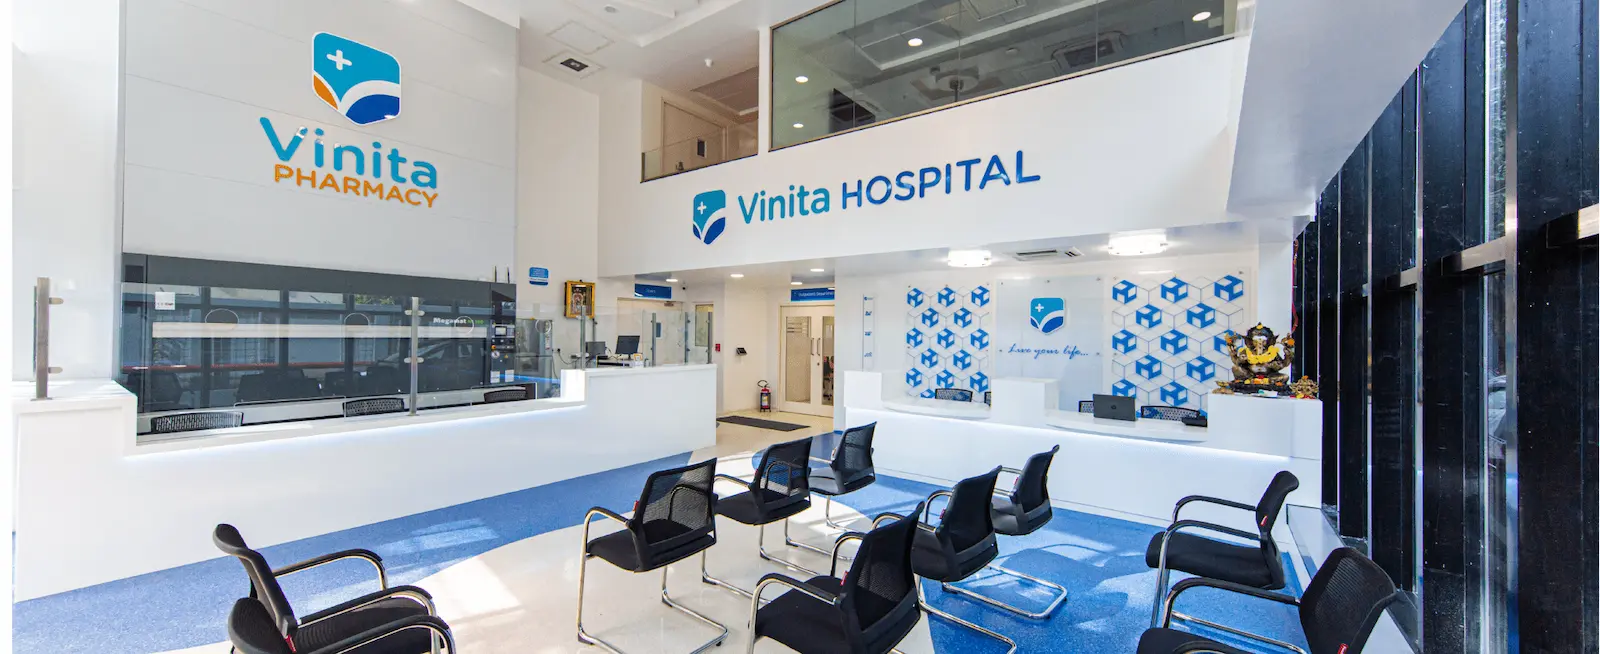 Vinita hospital banner